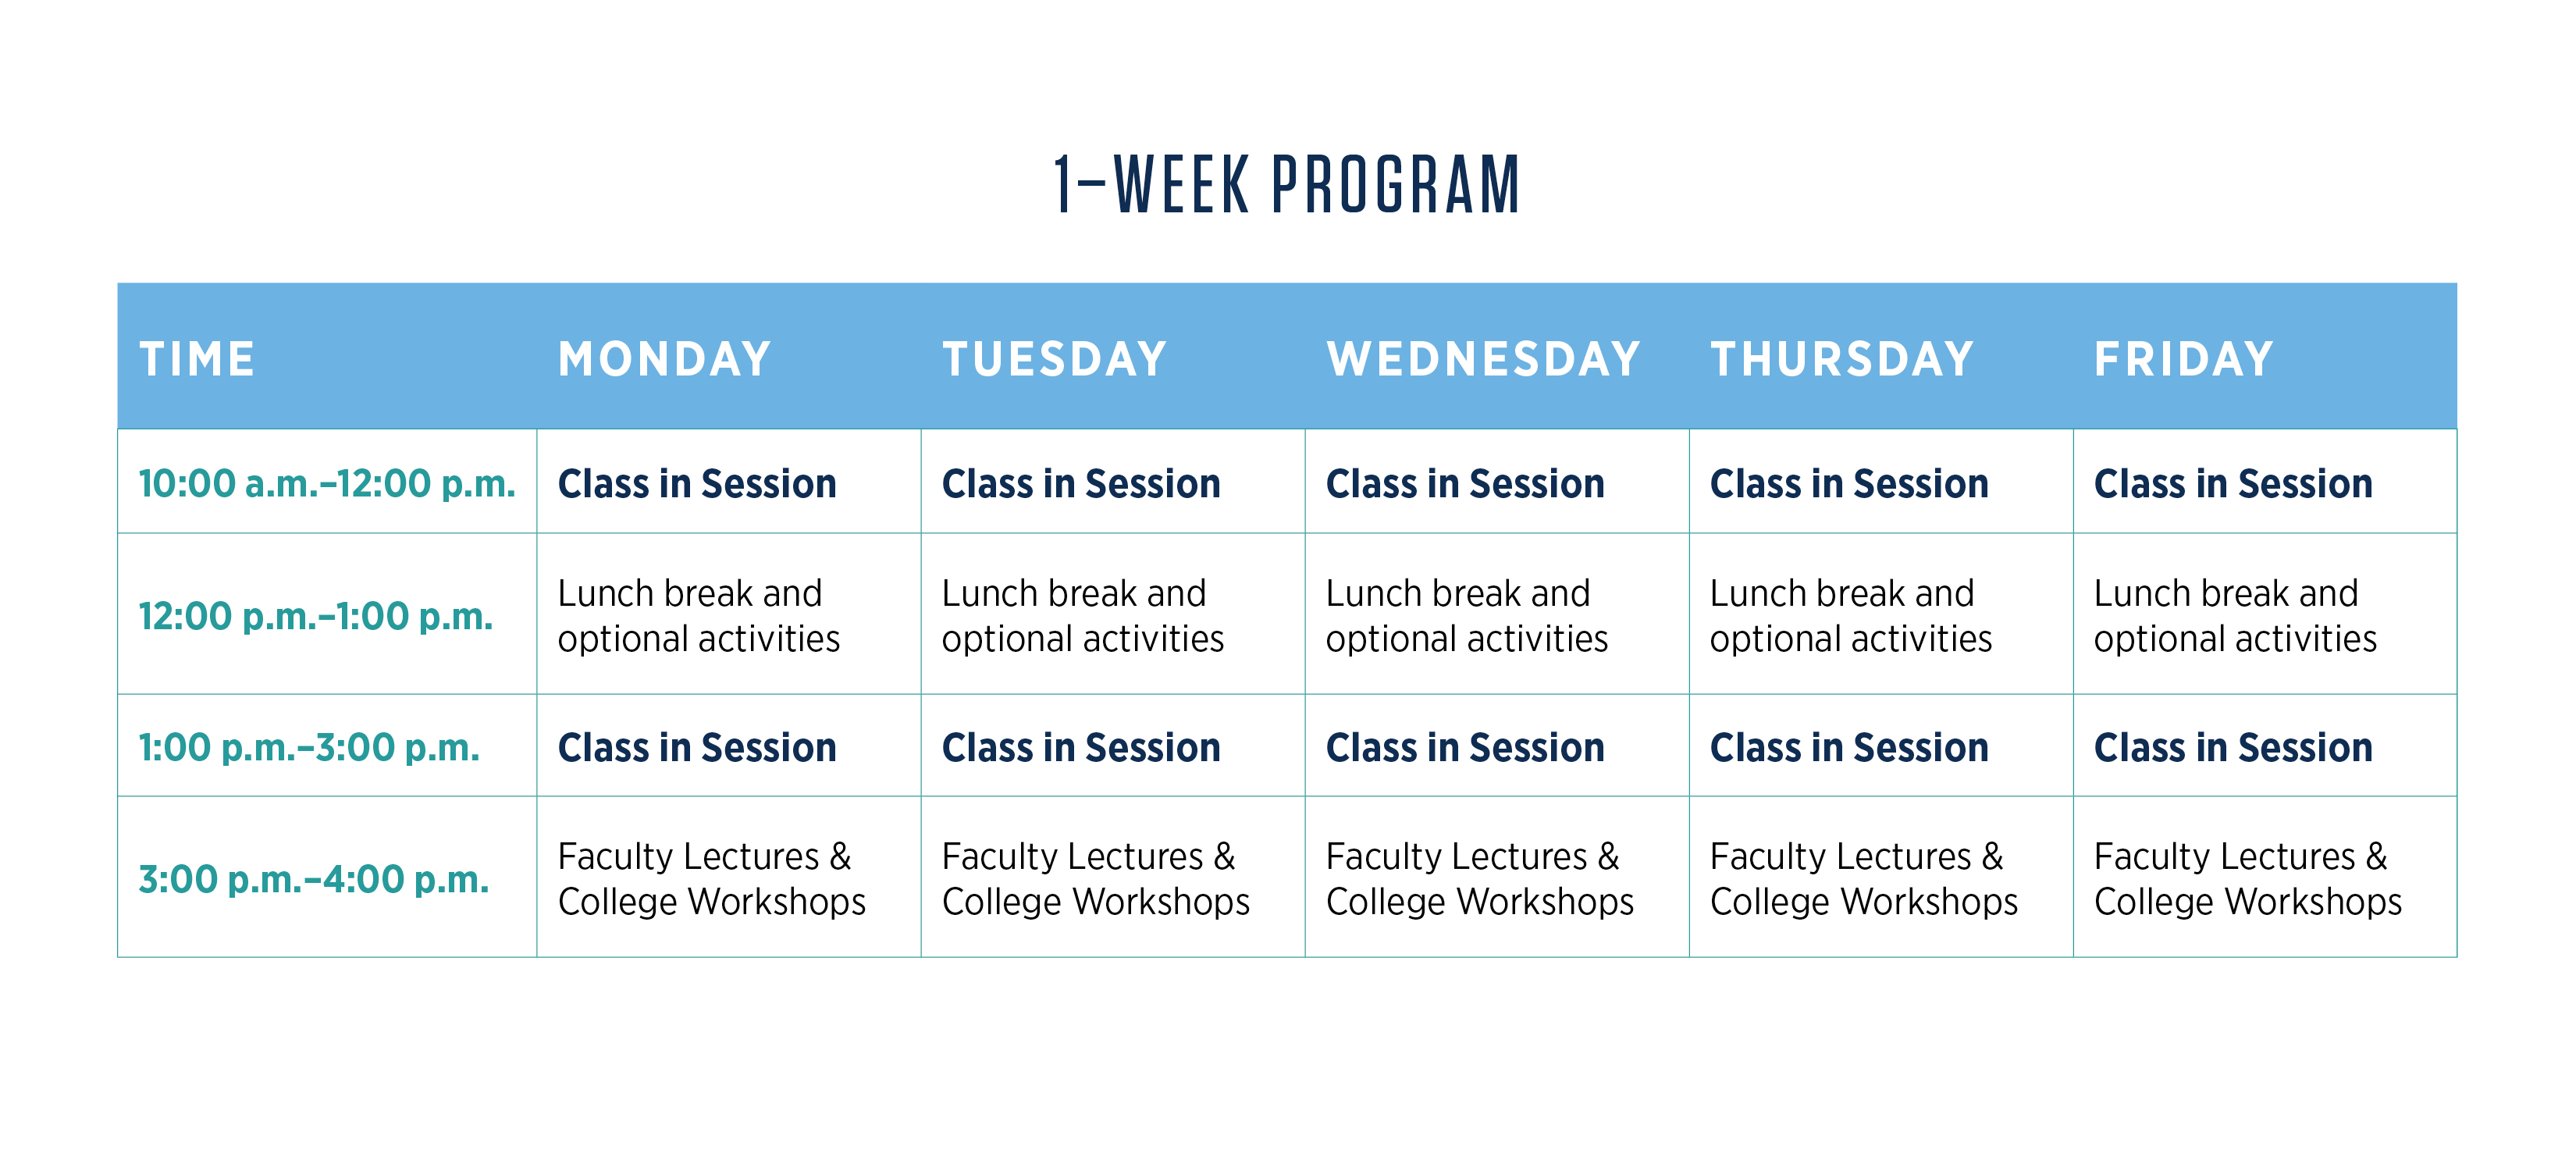 Enlargeable graphic showing 1-Week Program Schedule